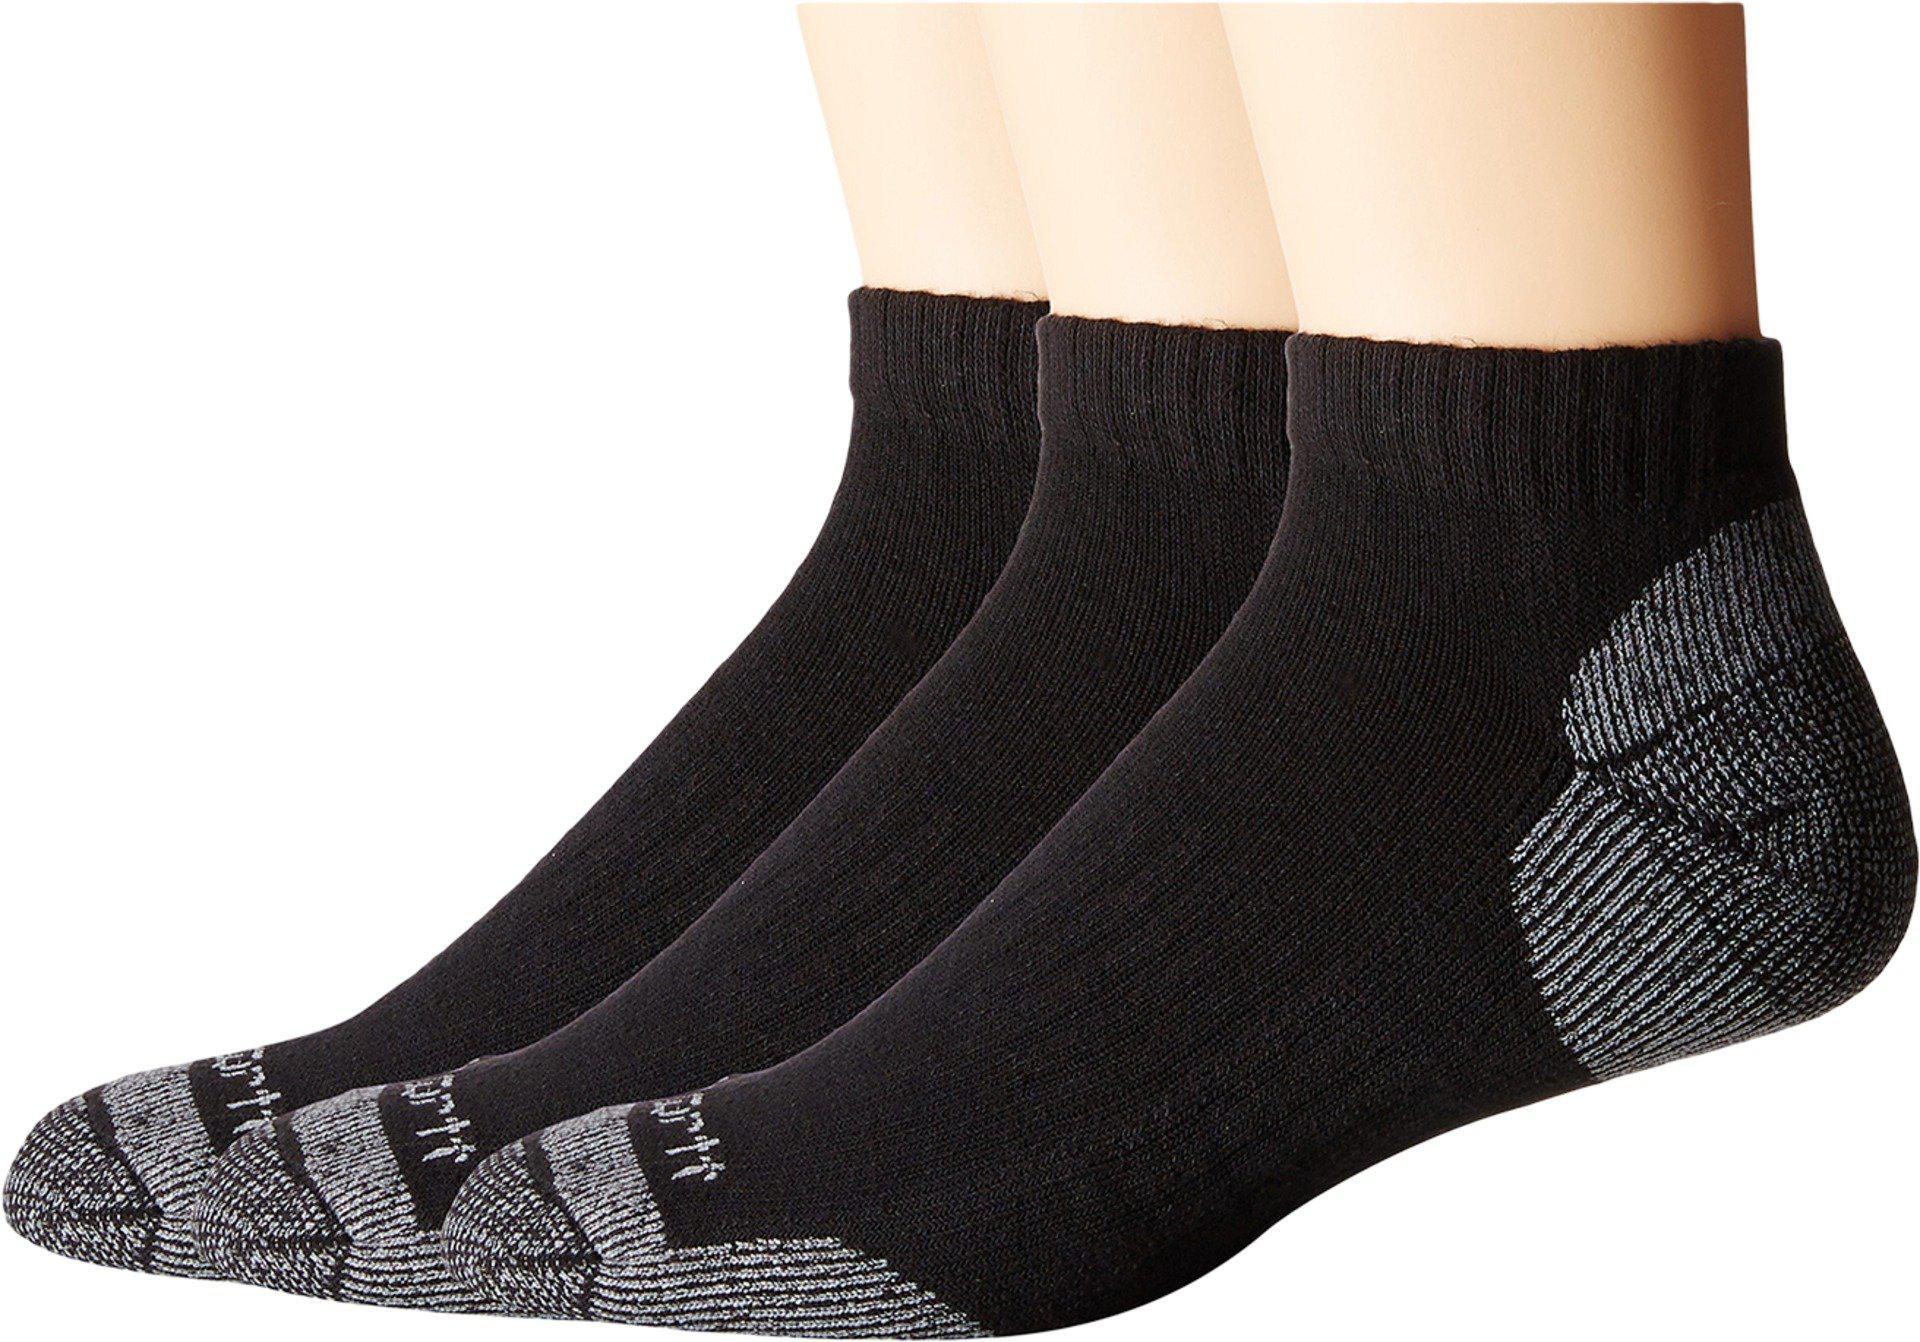 Carhartt Cotton Low Cut Work Socks 3-pack in Black for Men - Lyst